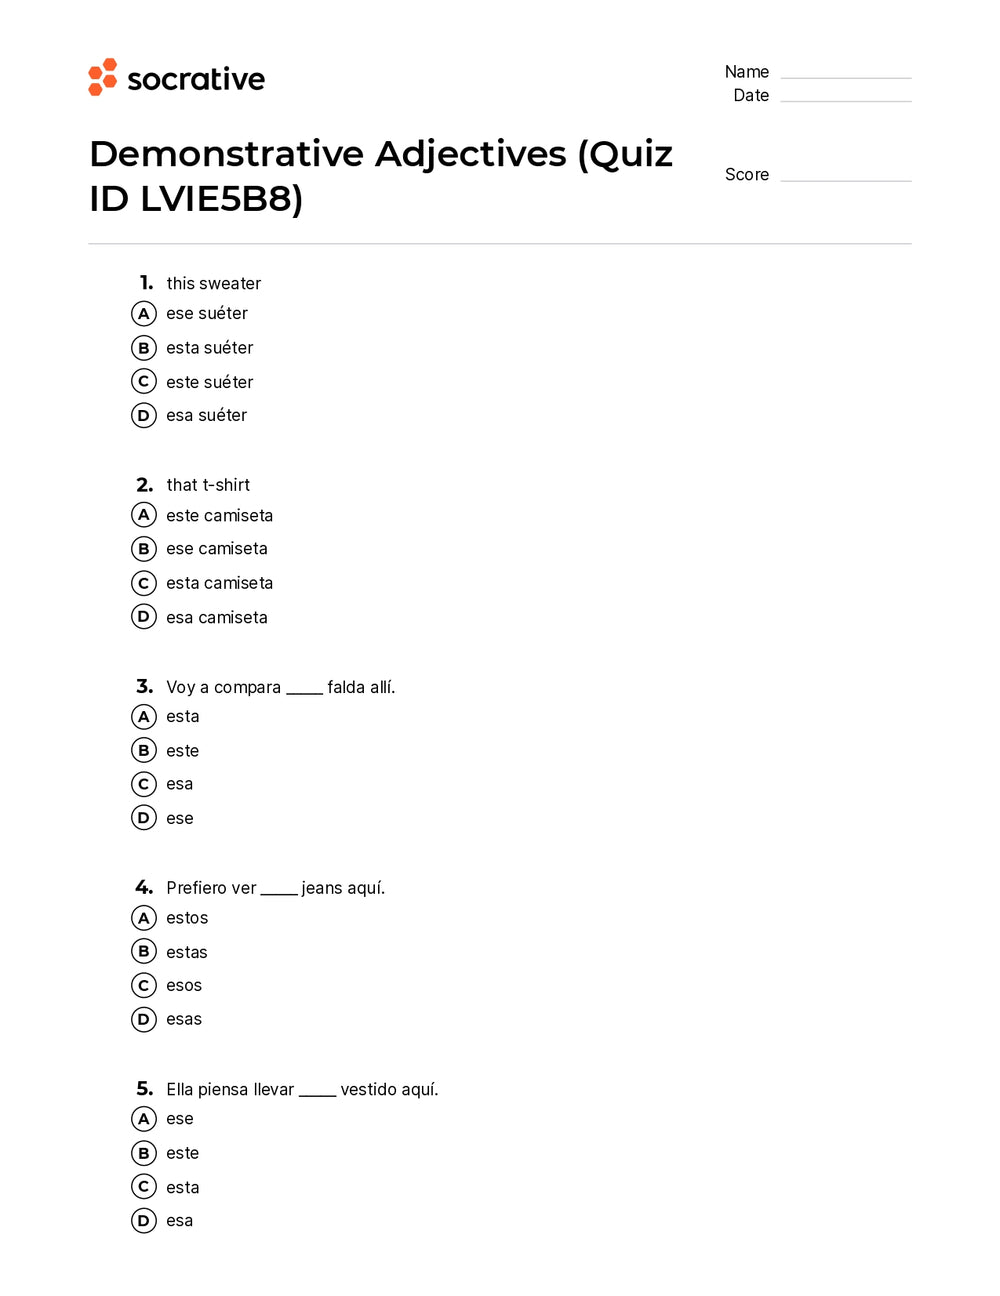 demonstrative-adjectives-quiz-shop